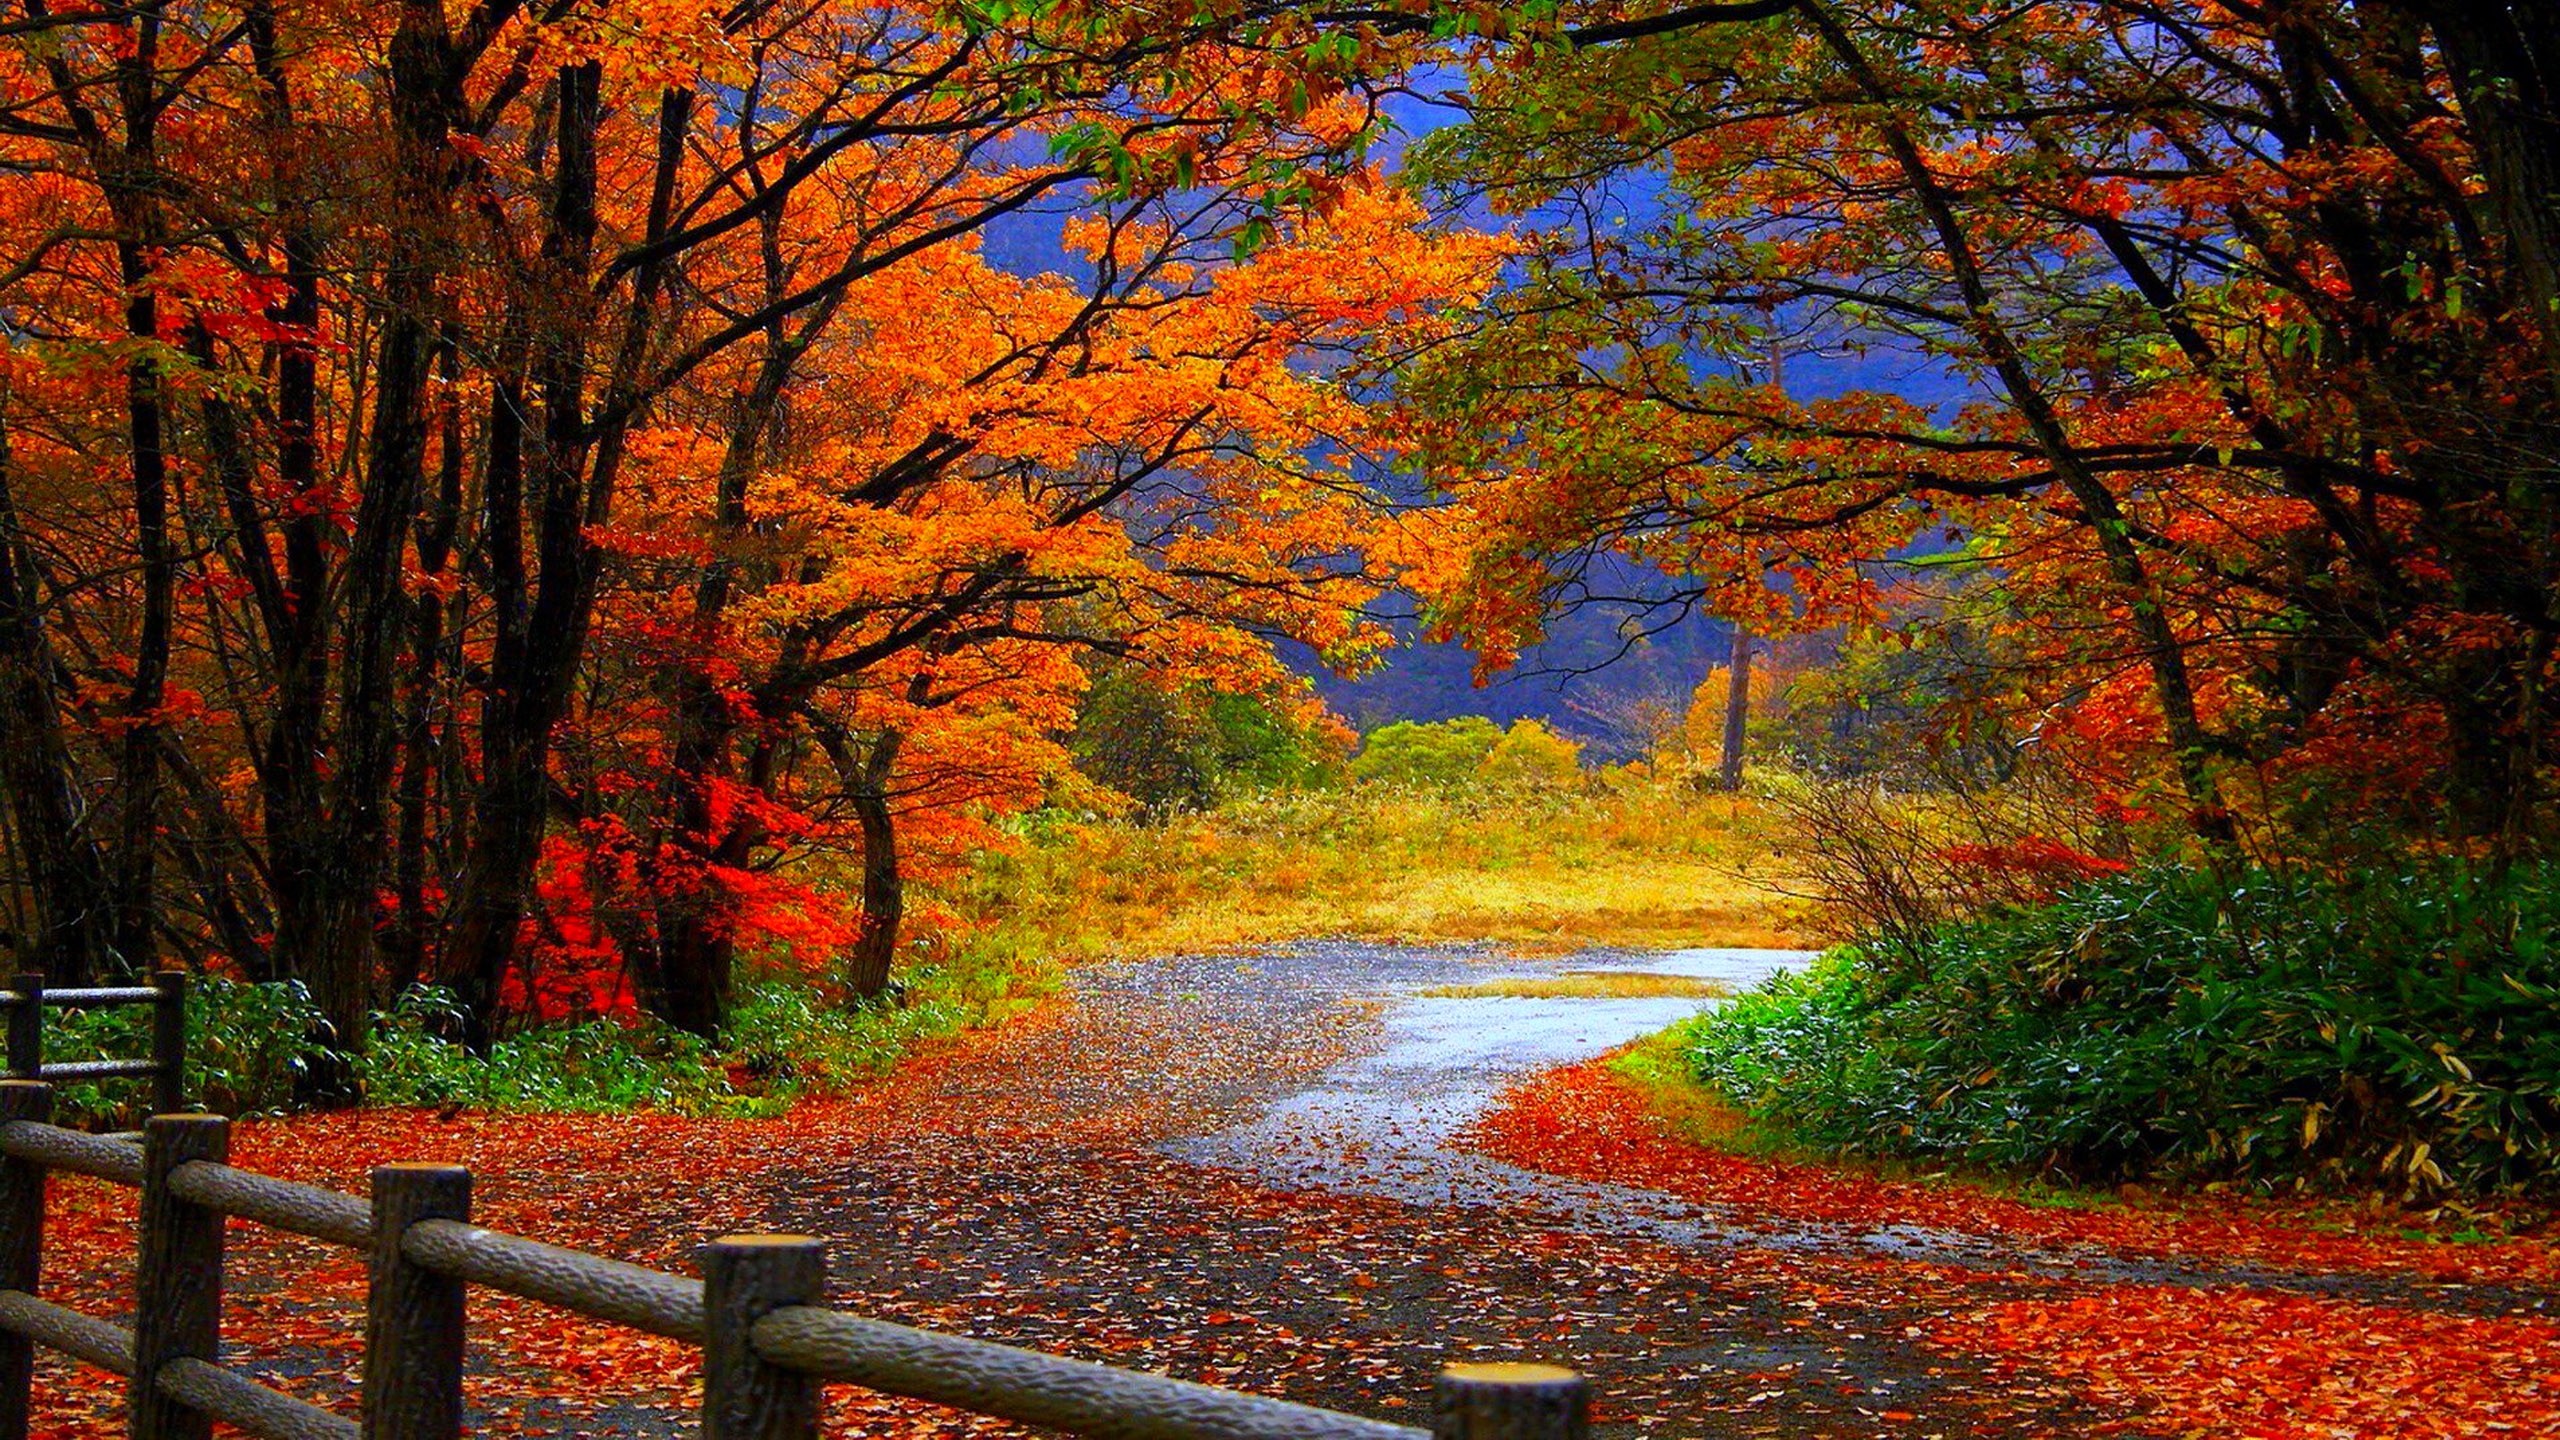 Autumn wallpaper WidescreenDownload free amazing High